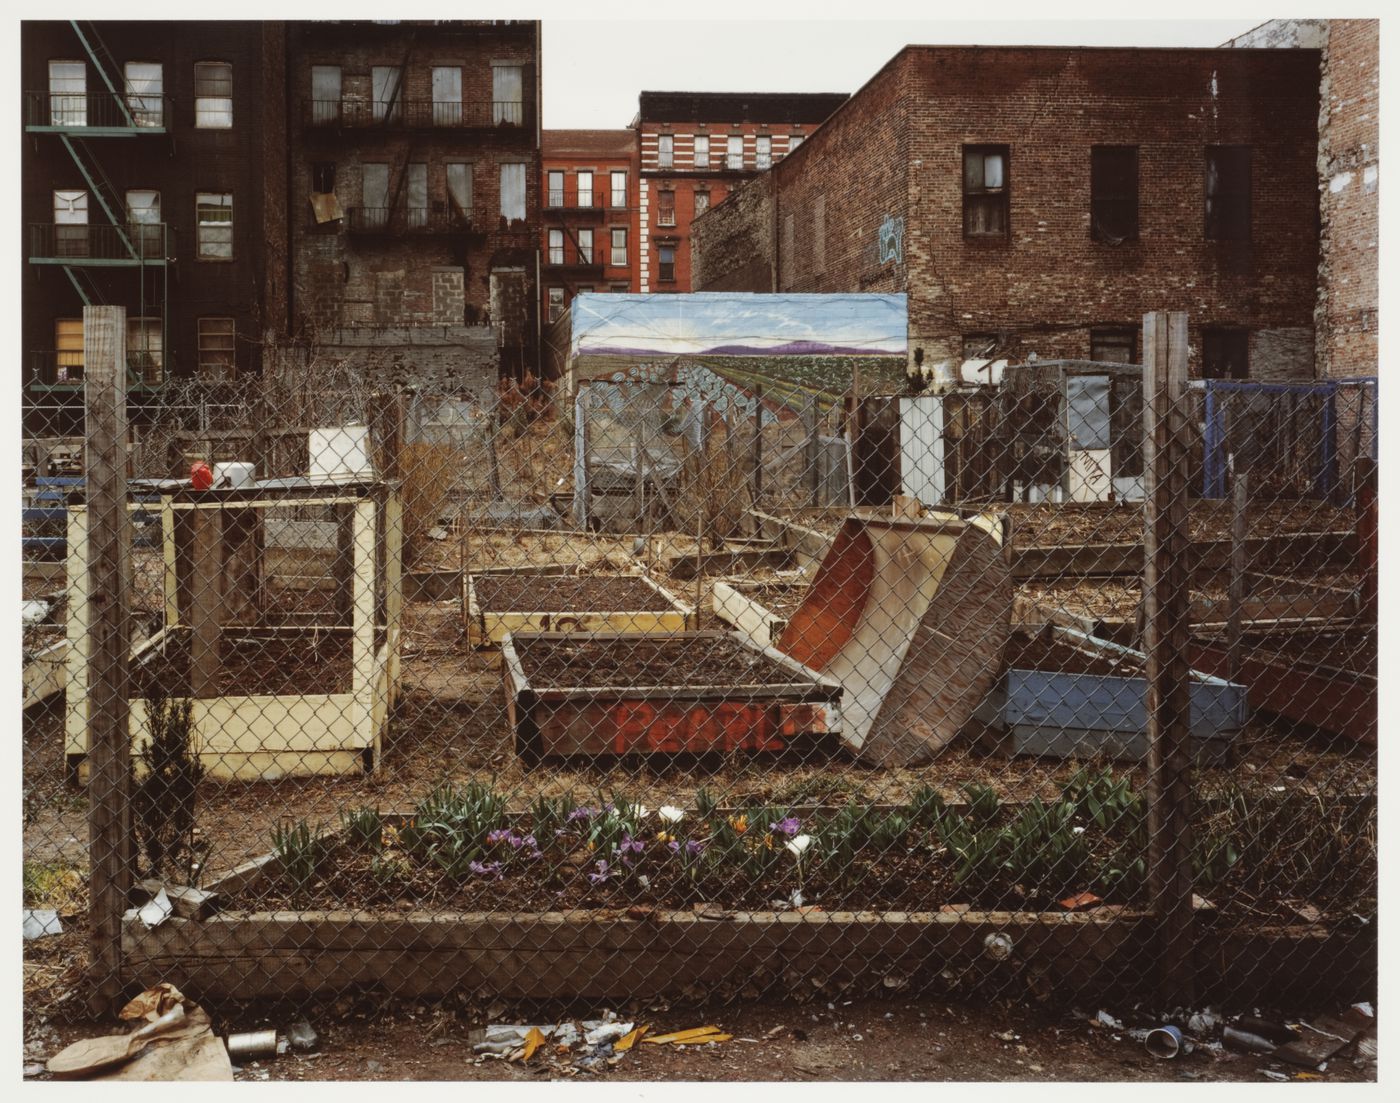 East 12th Street: Community garden, New York City, New York